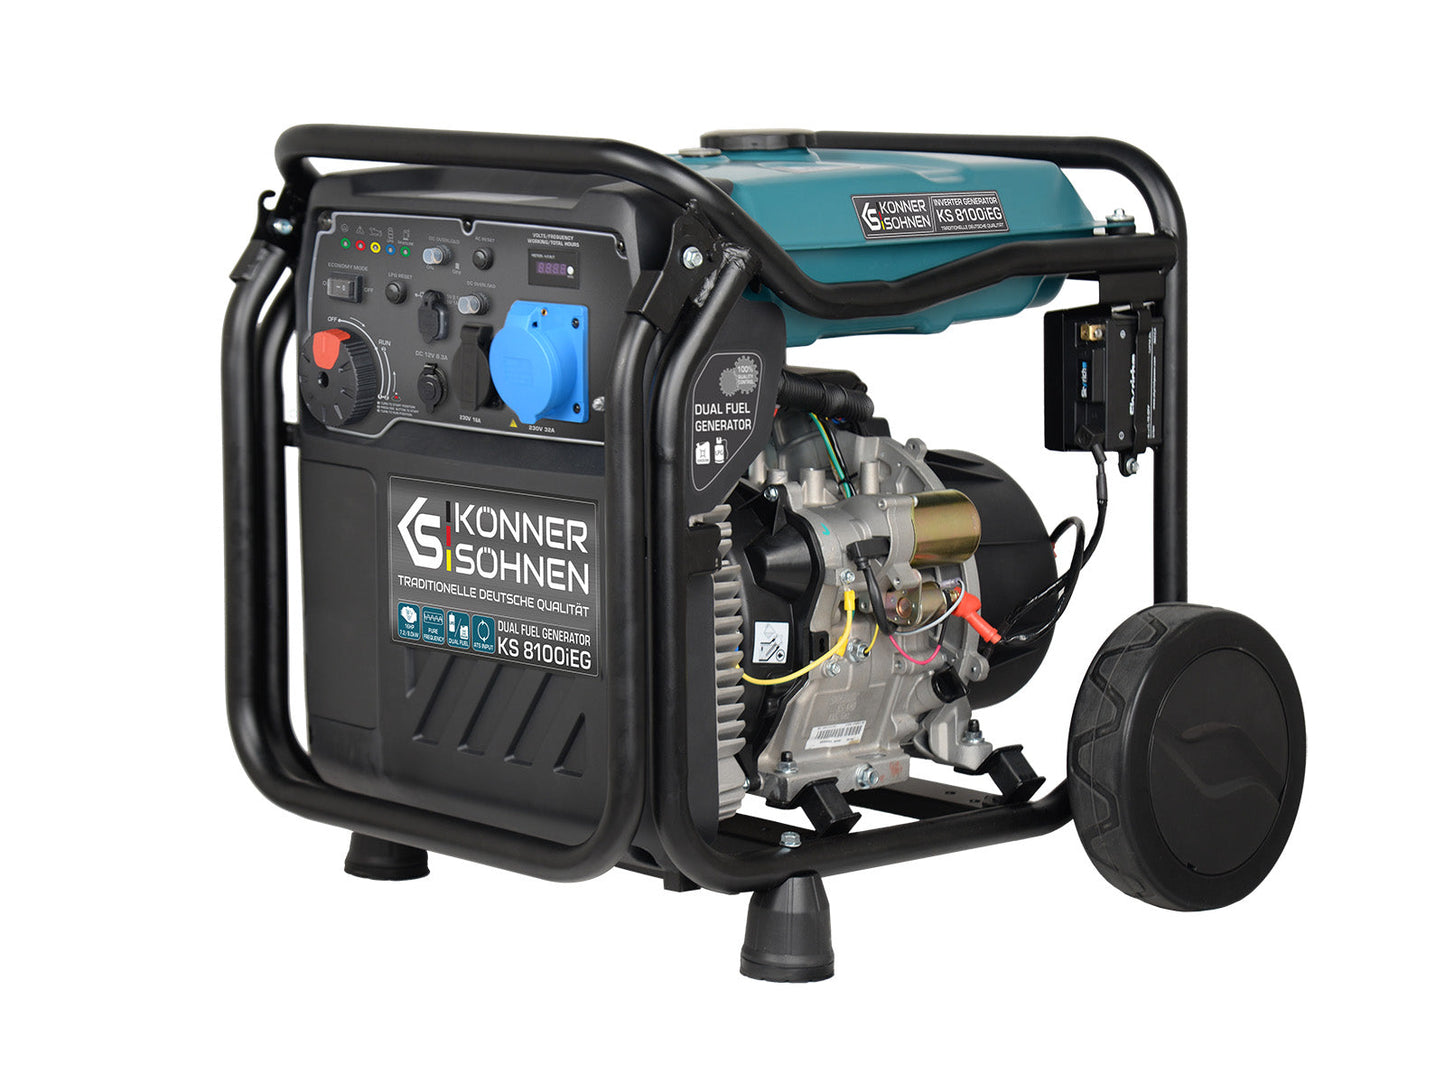 Inverter generator KS 8100iE G petrol/gas LPG